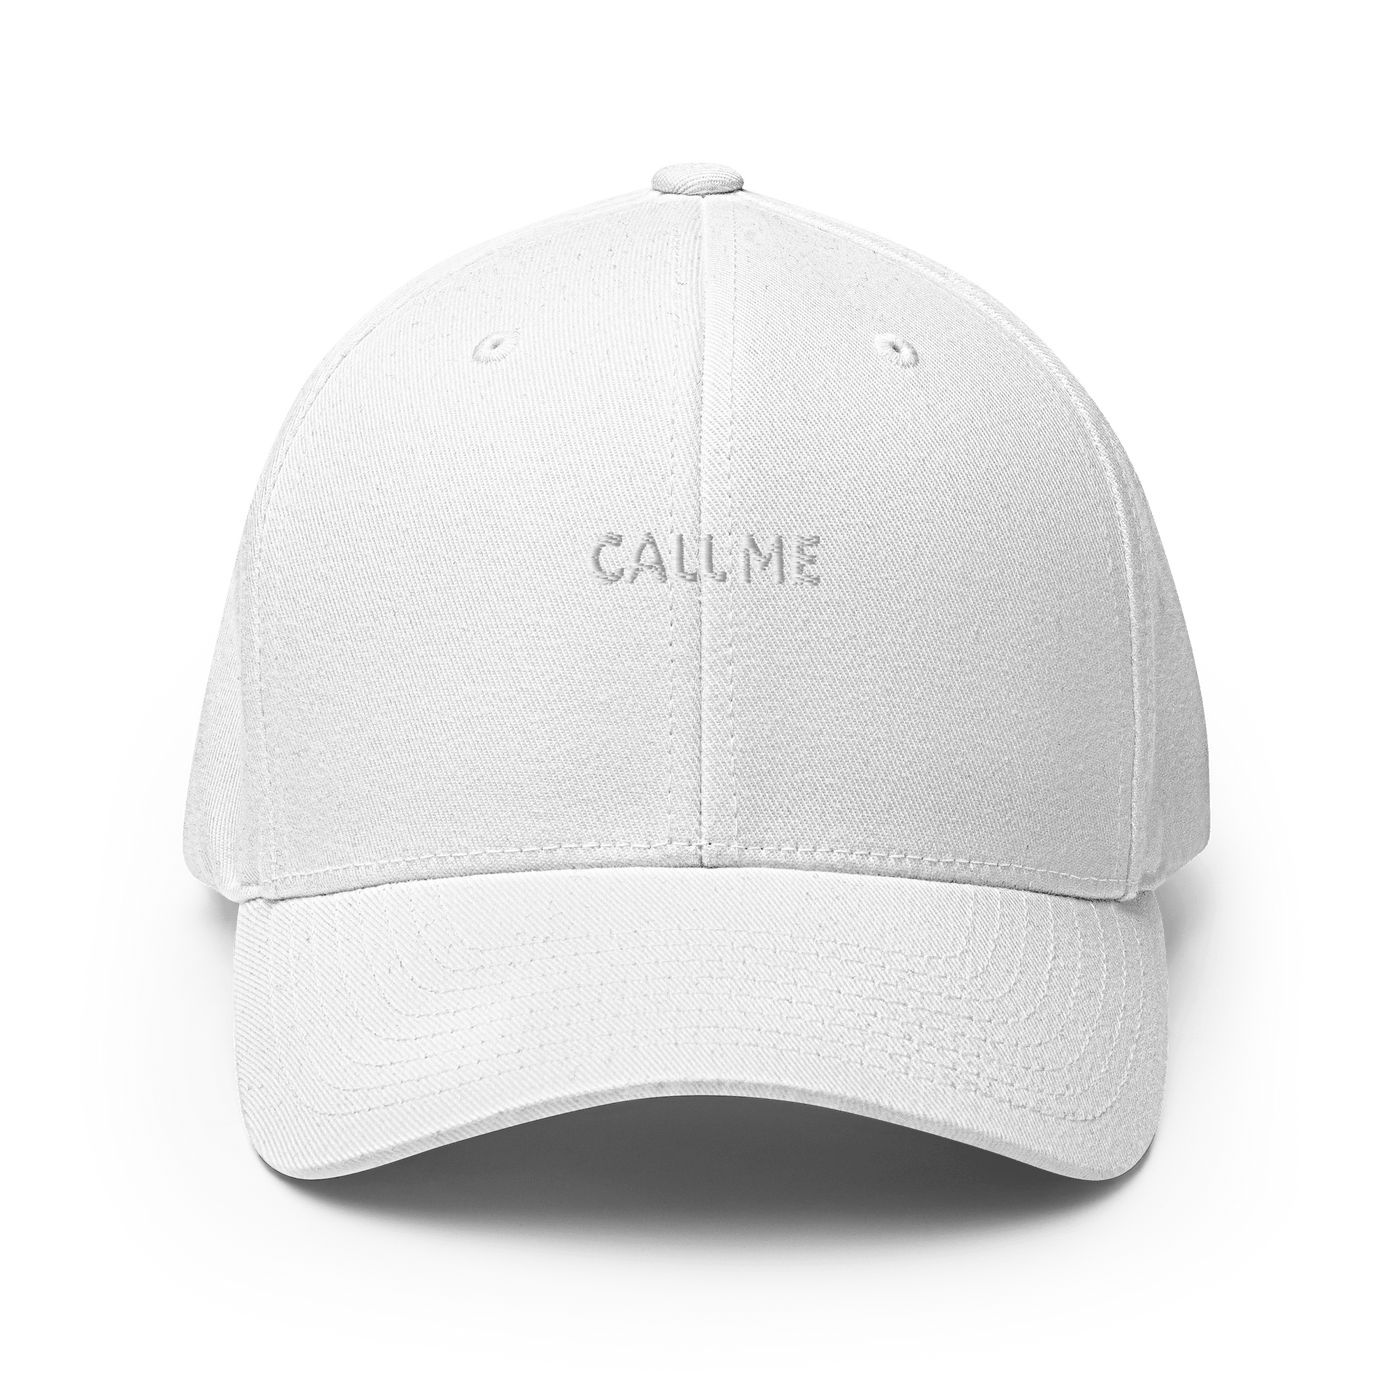 Call Me Flexfit Cap - Khaki - S/M - Just Another Cap Store